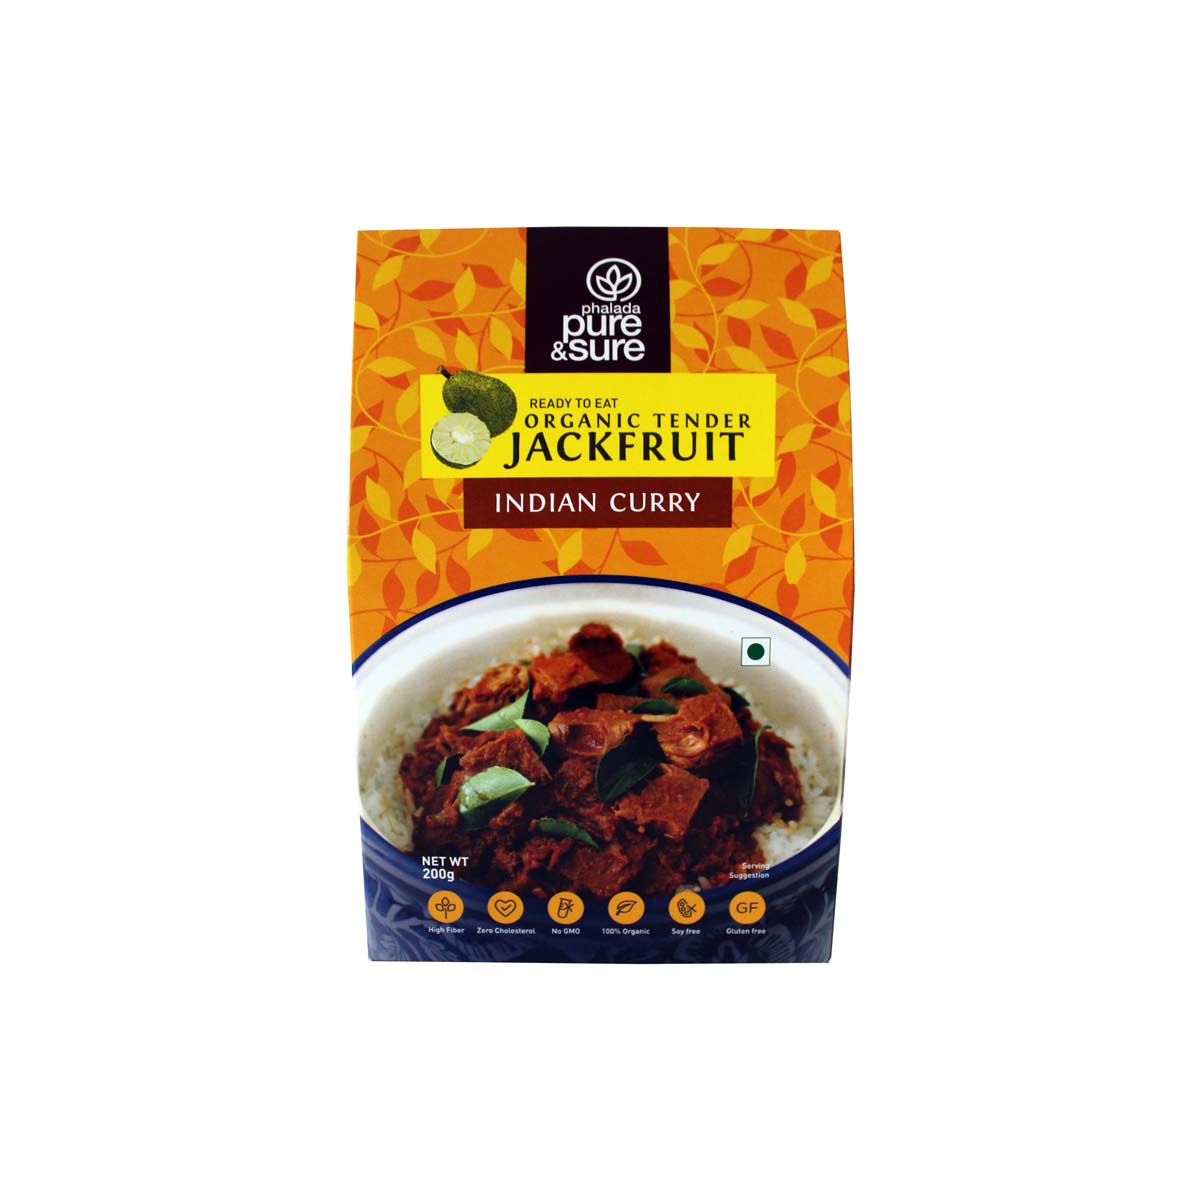 Organic Tender Jackfruit - Indian Curry - Orgpick.com